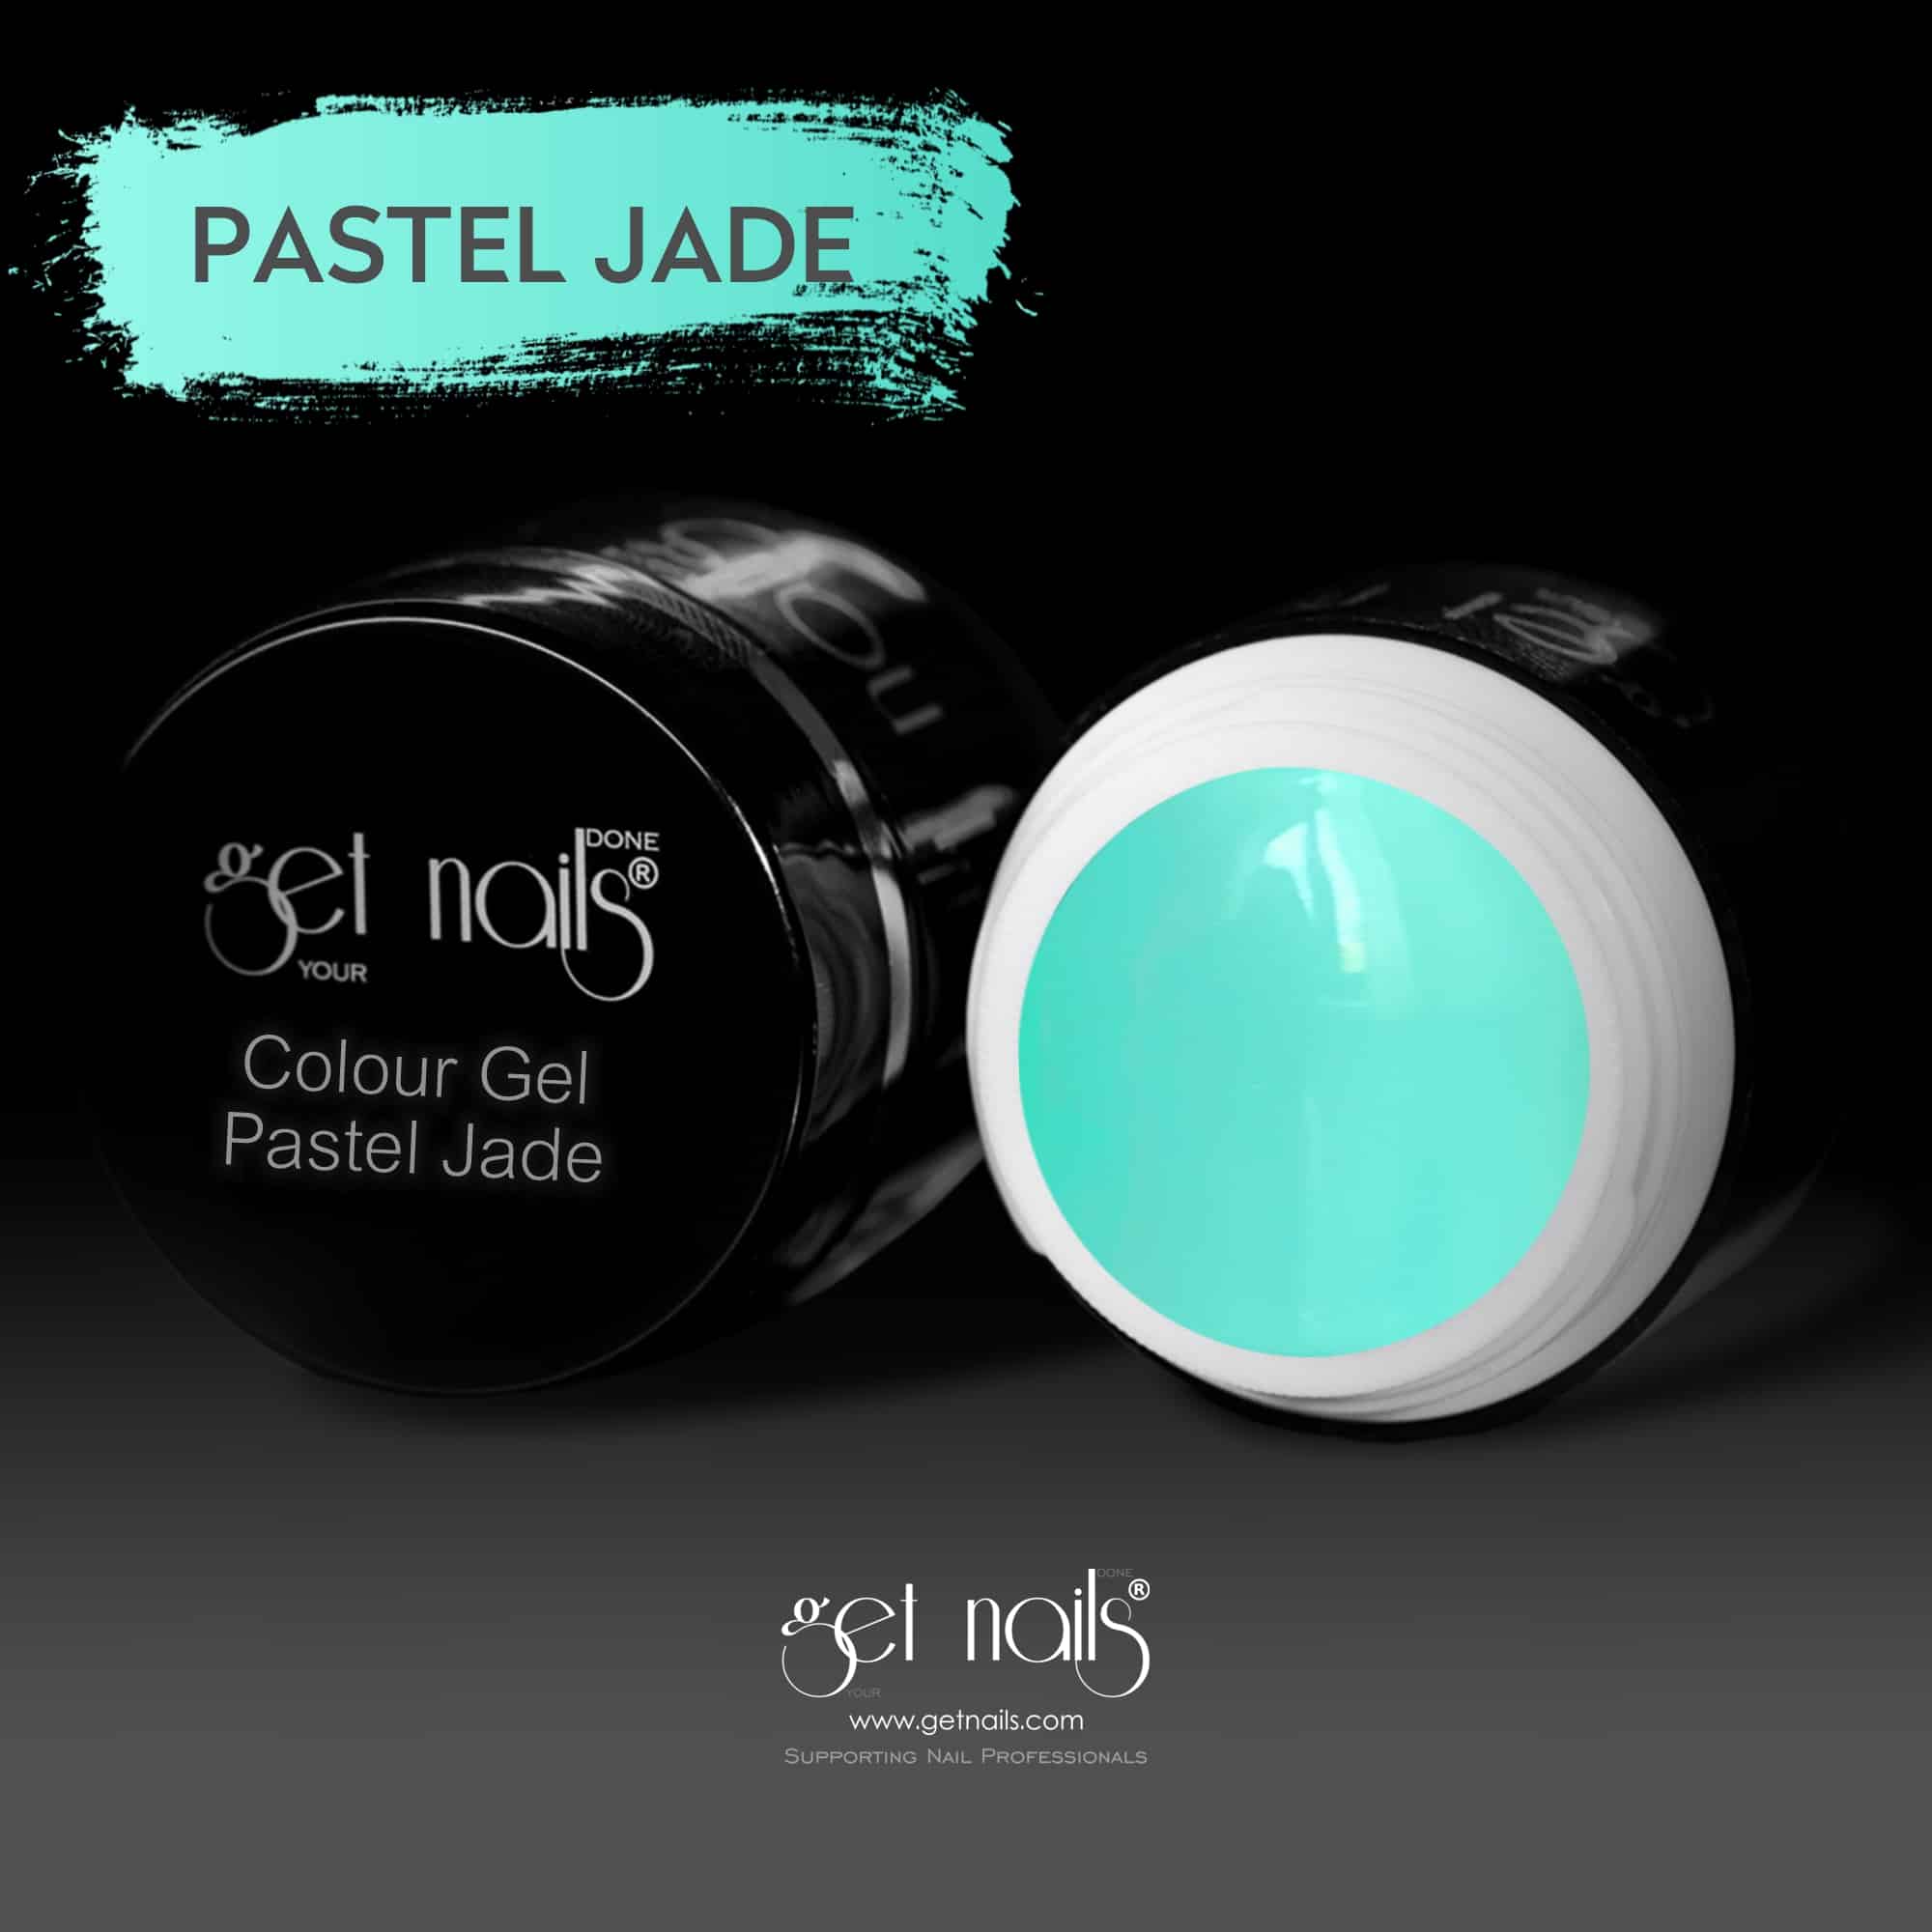 Get Nails Austria - Colour Gel Pastel Jade 5g